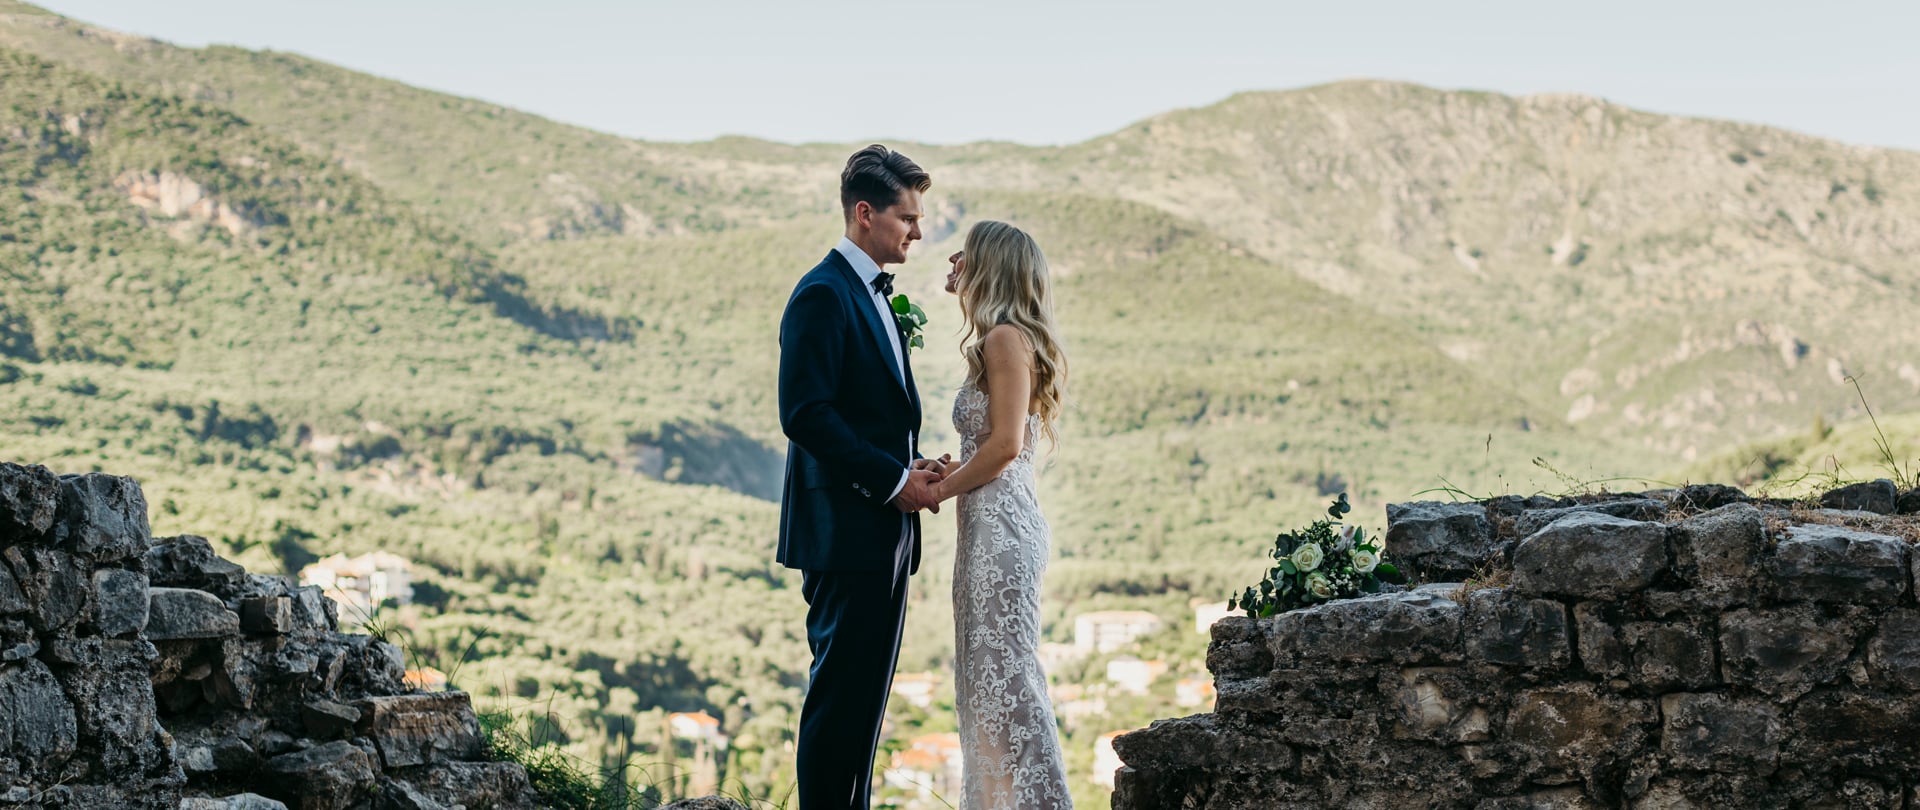 Areti & Dan Wedding Video Filmed at Parga, Greece